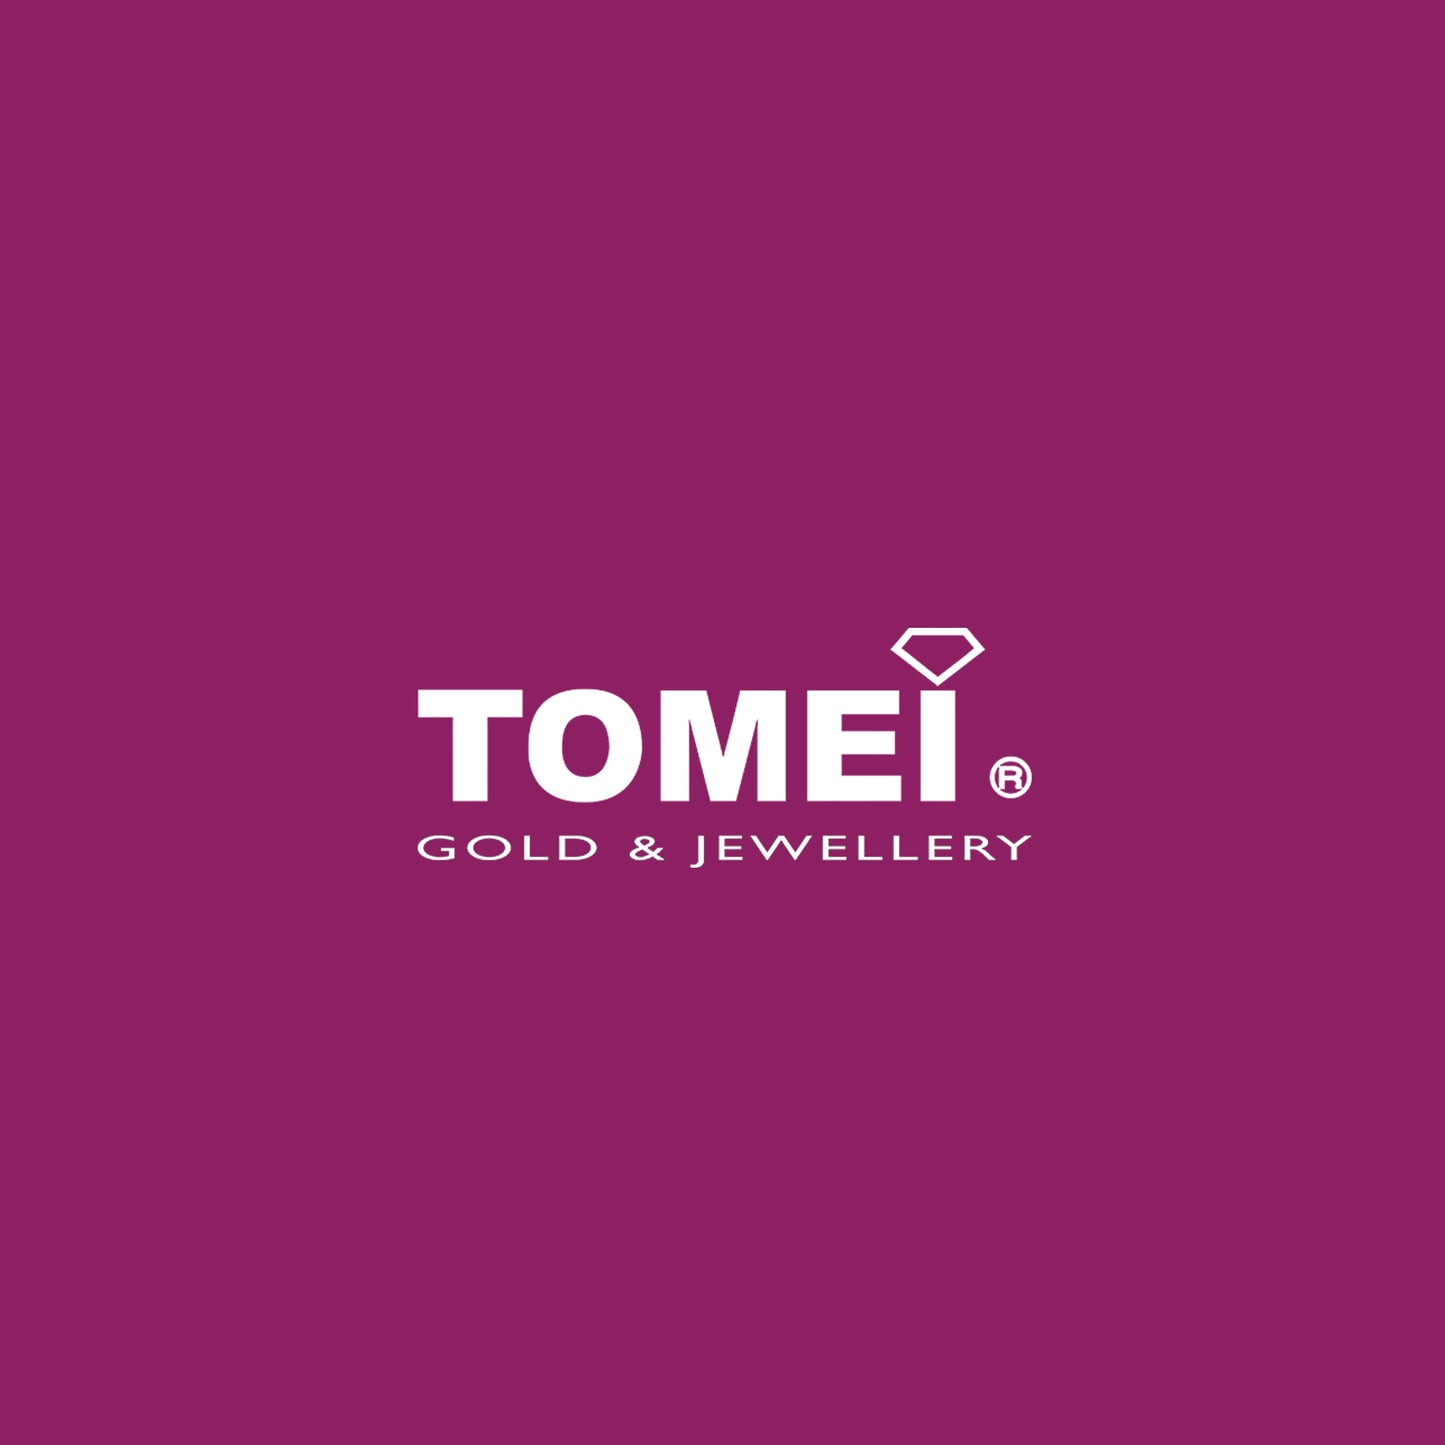 TOMEI Earrings of Hearts with Diamantes, Diamond White Gold 585 (E1172)